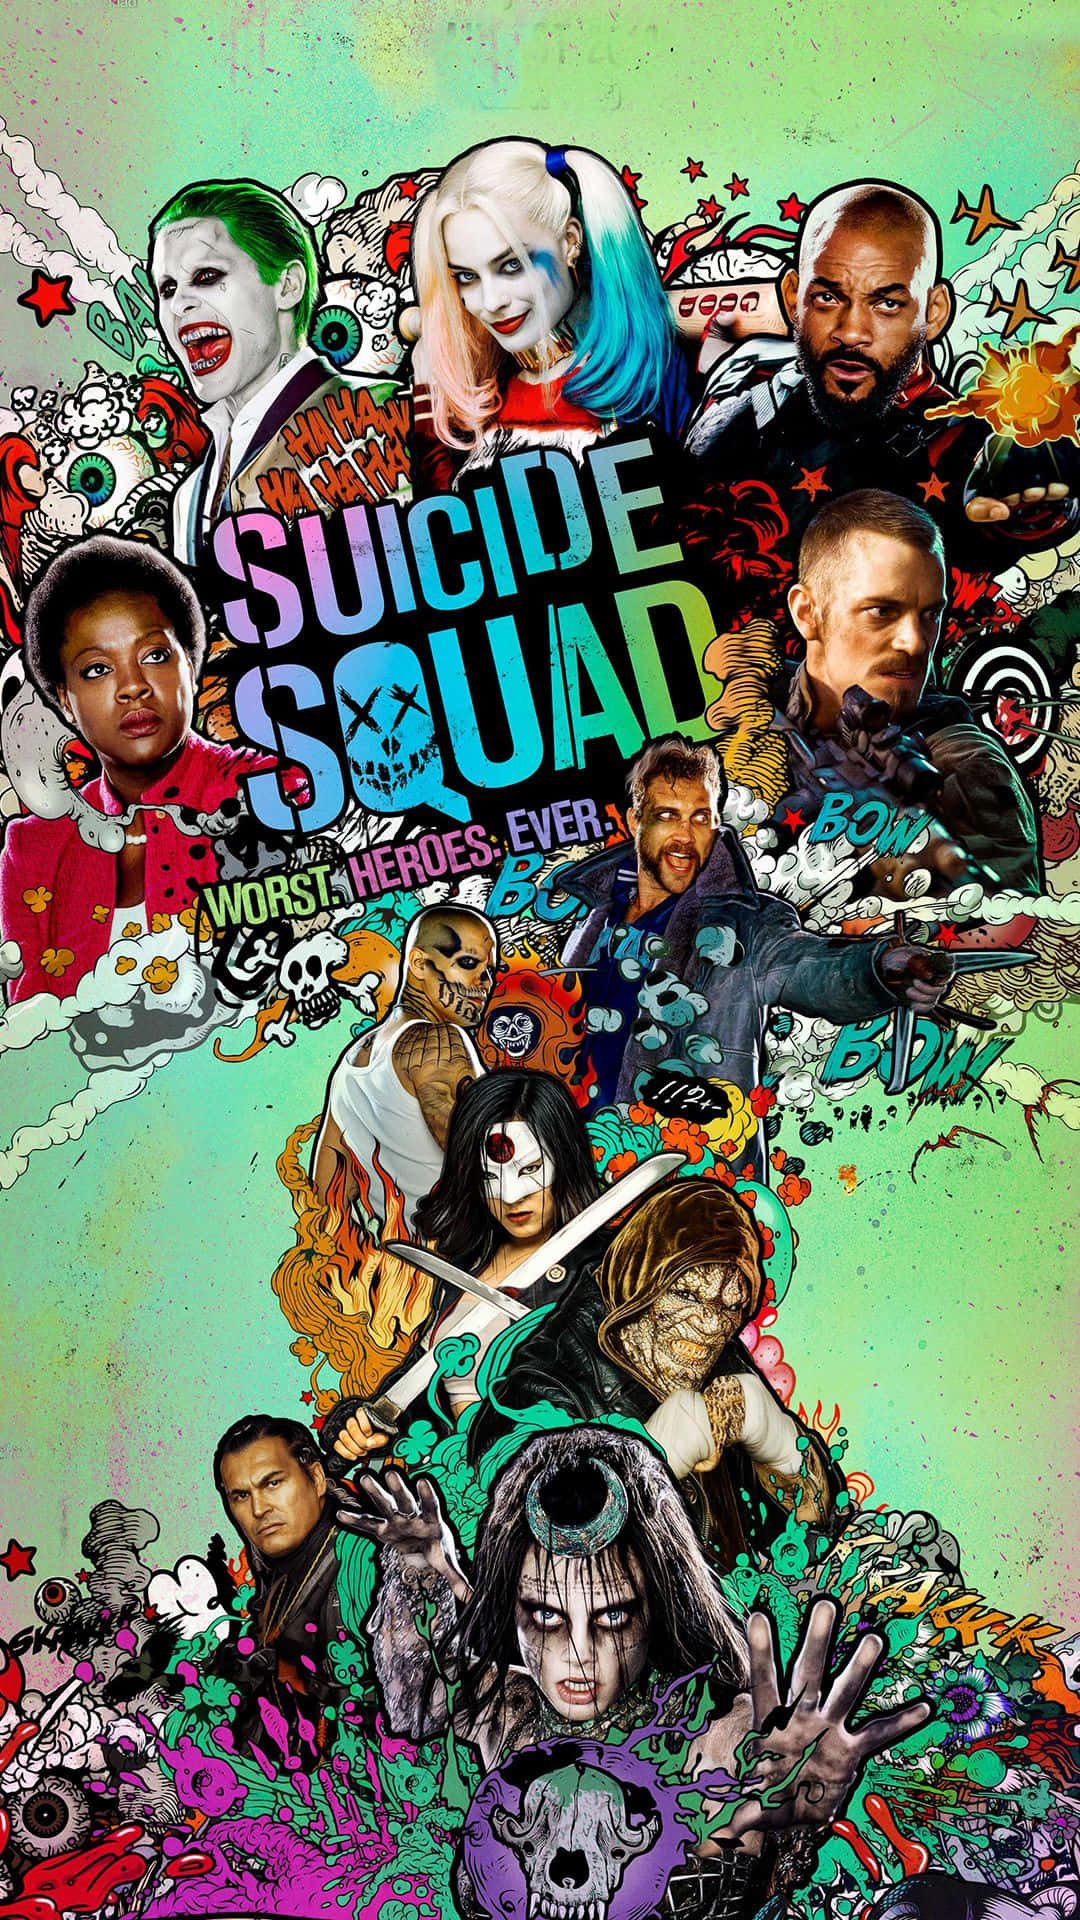 Suicide Squad Movie Cast in Action